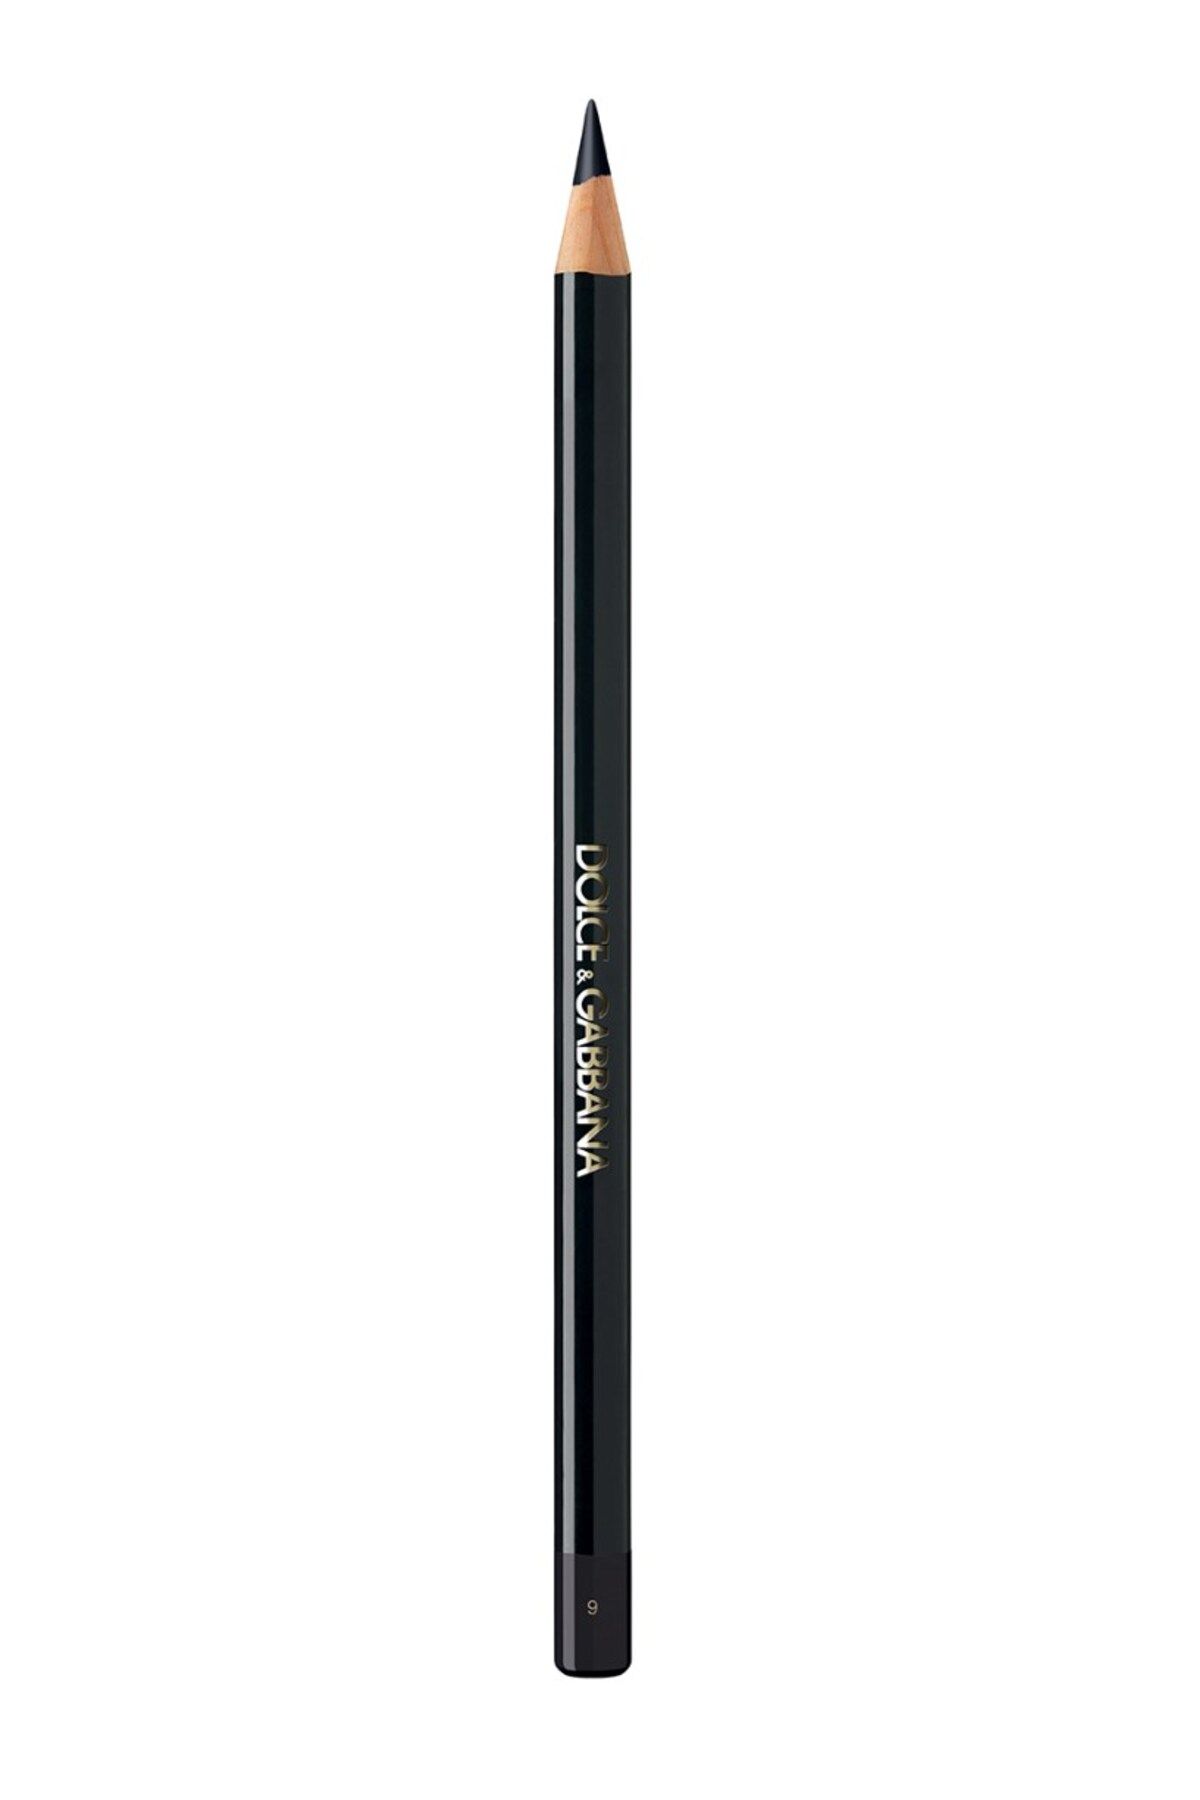 Dolce &Gabbana The Khol Pencil 6 Graphite